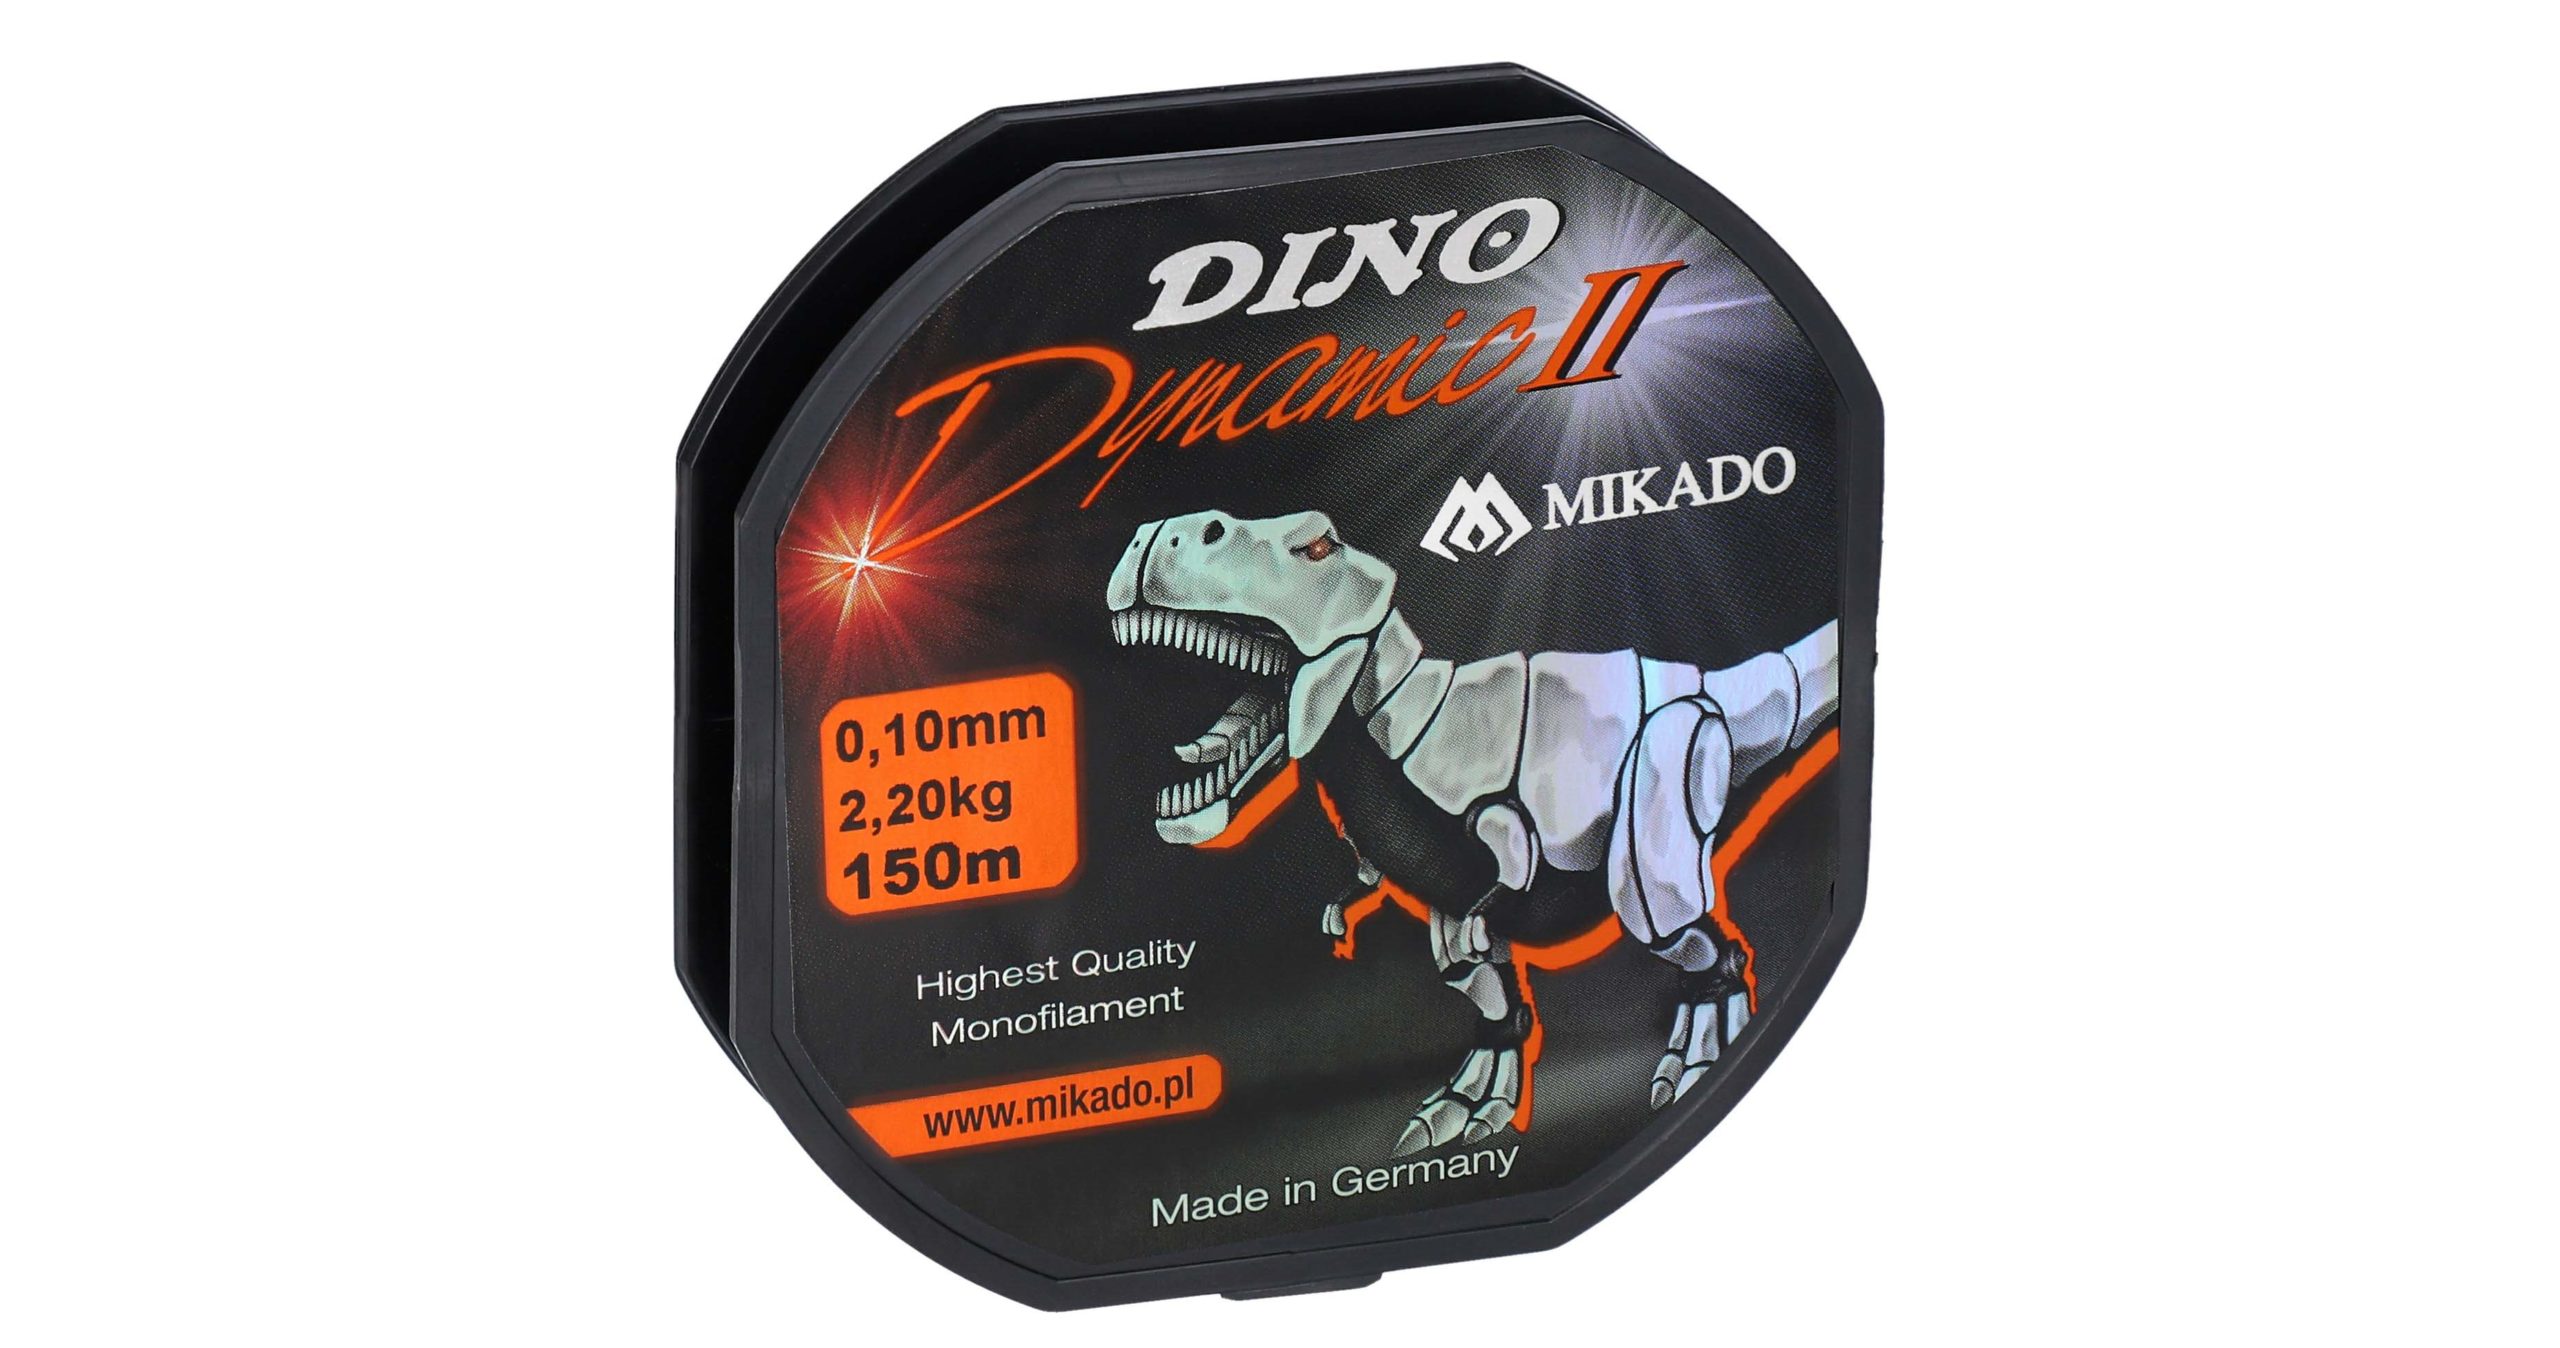 Mikado wędkarstwo - ŻYŁKA - DINO DYNAMIC II - 0.28mm/9.80kg/150m - op.2szp.